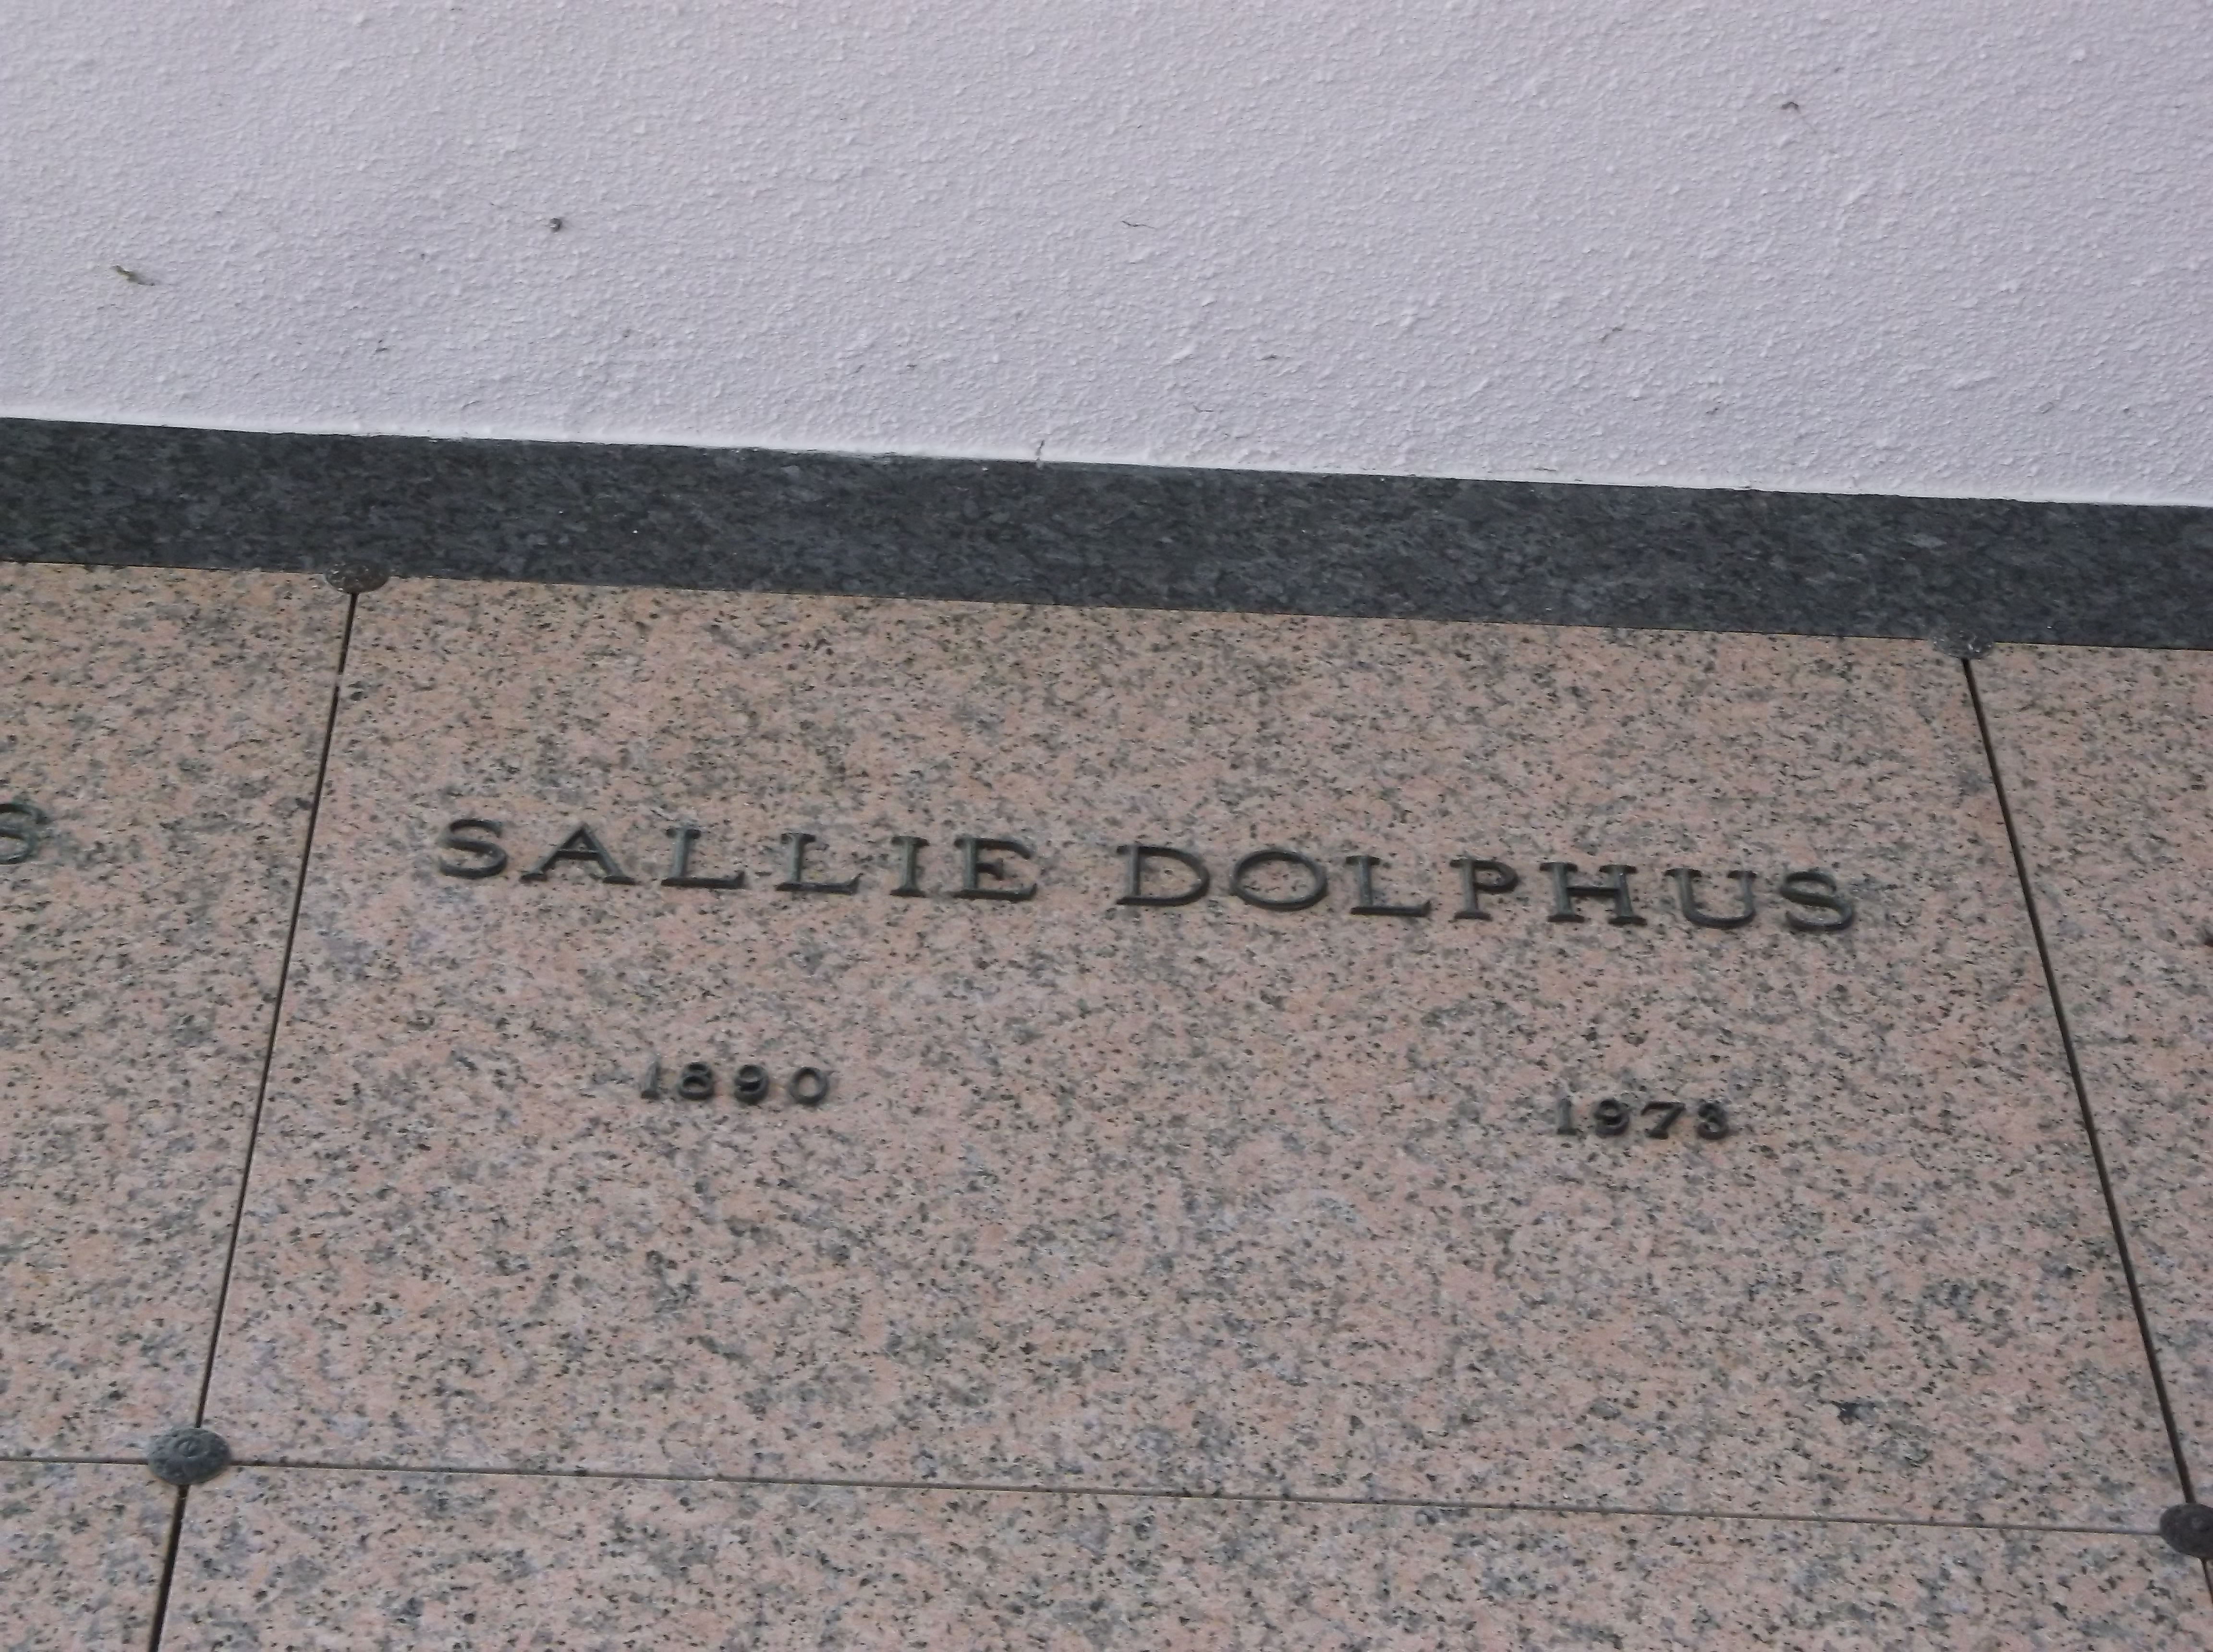 Sallie Dolphus